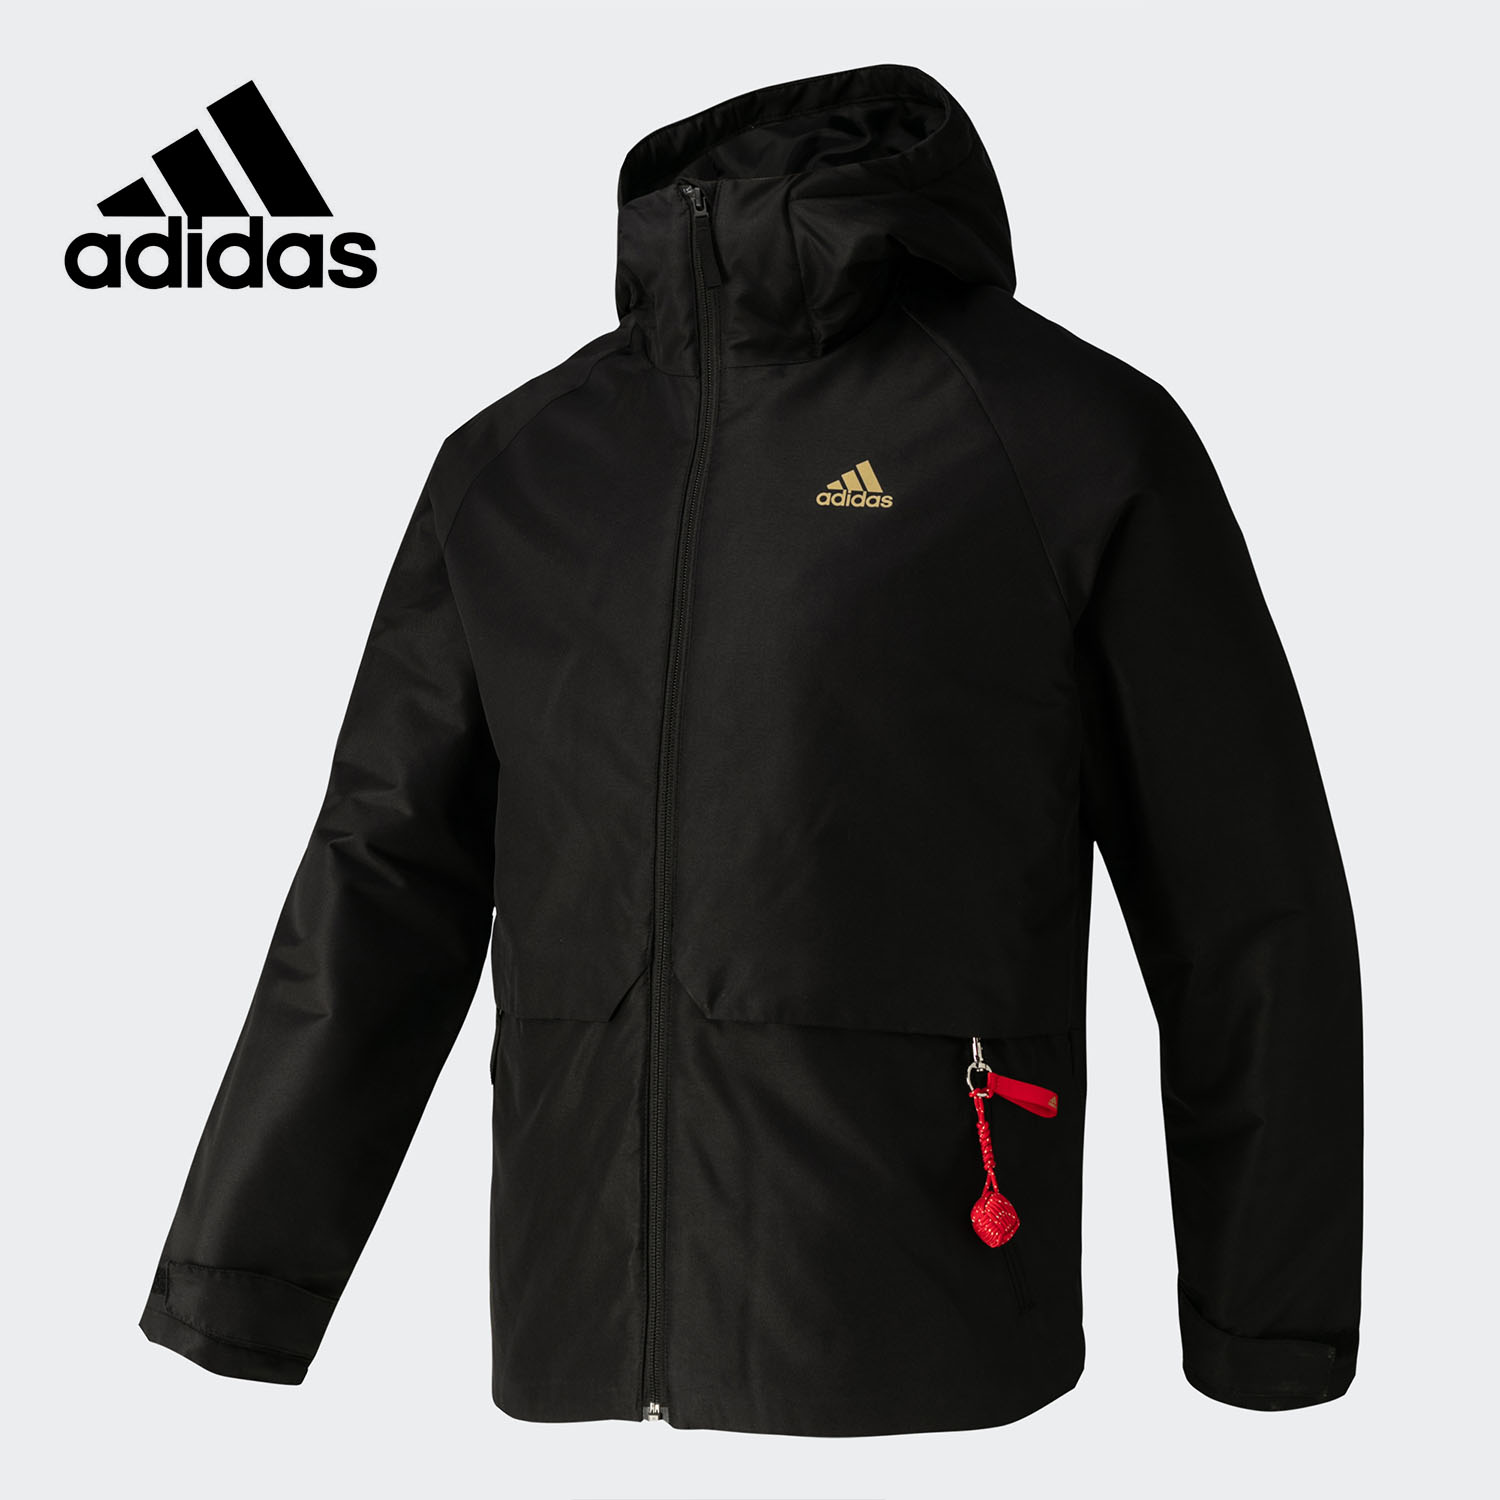 Adidas/阿迪达斯正品新款男子户外运动棉服夹克外套FT8912 运动服/休闲服装 运动棉衣 原图主图